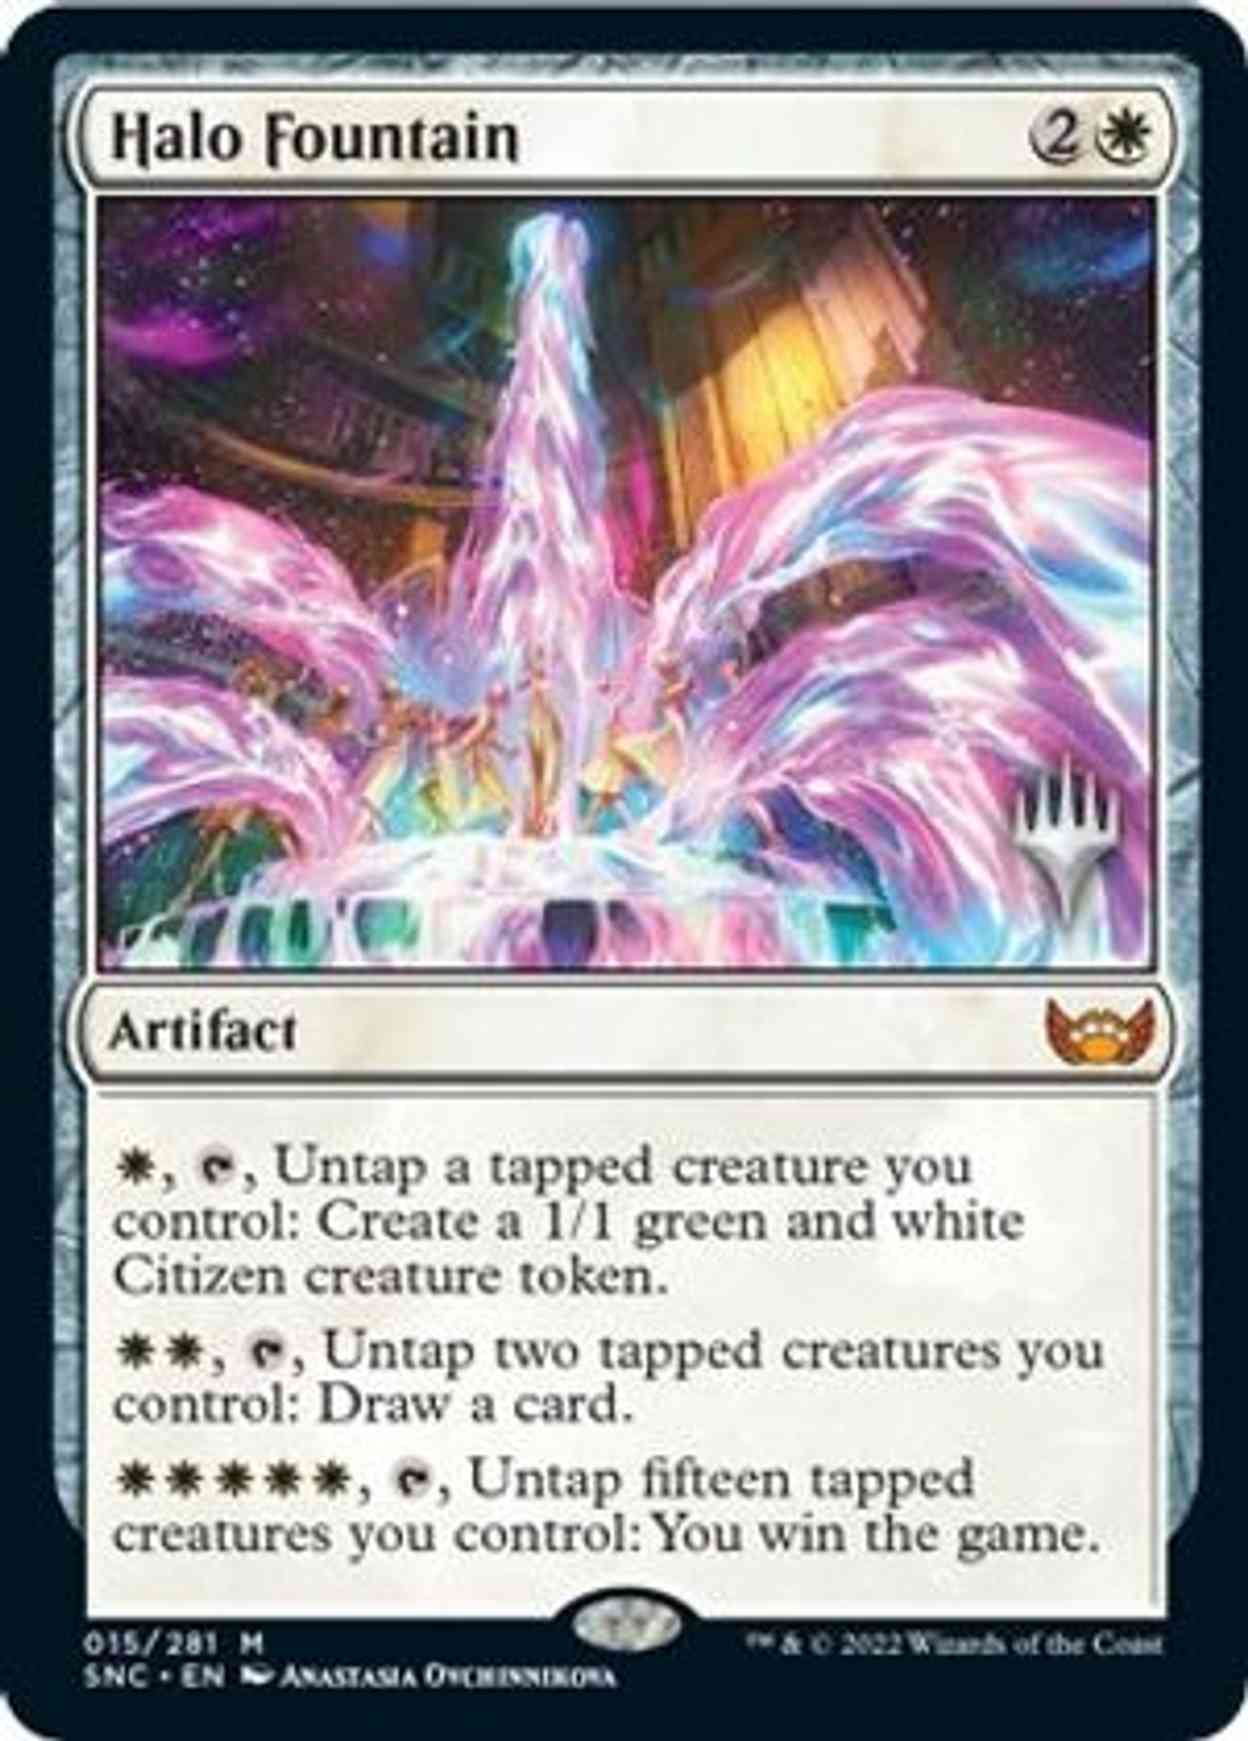 Halo Fountain magic card front